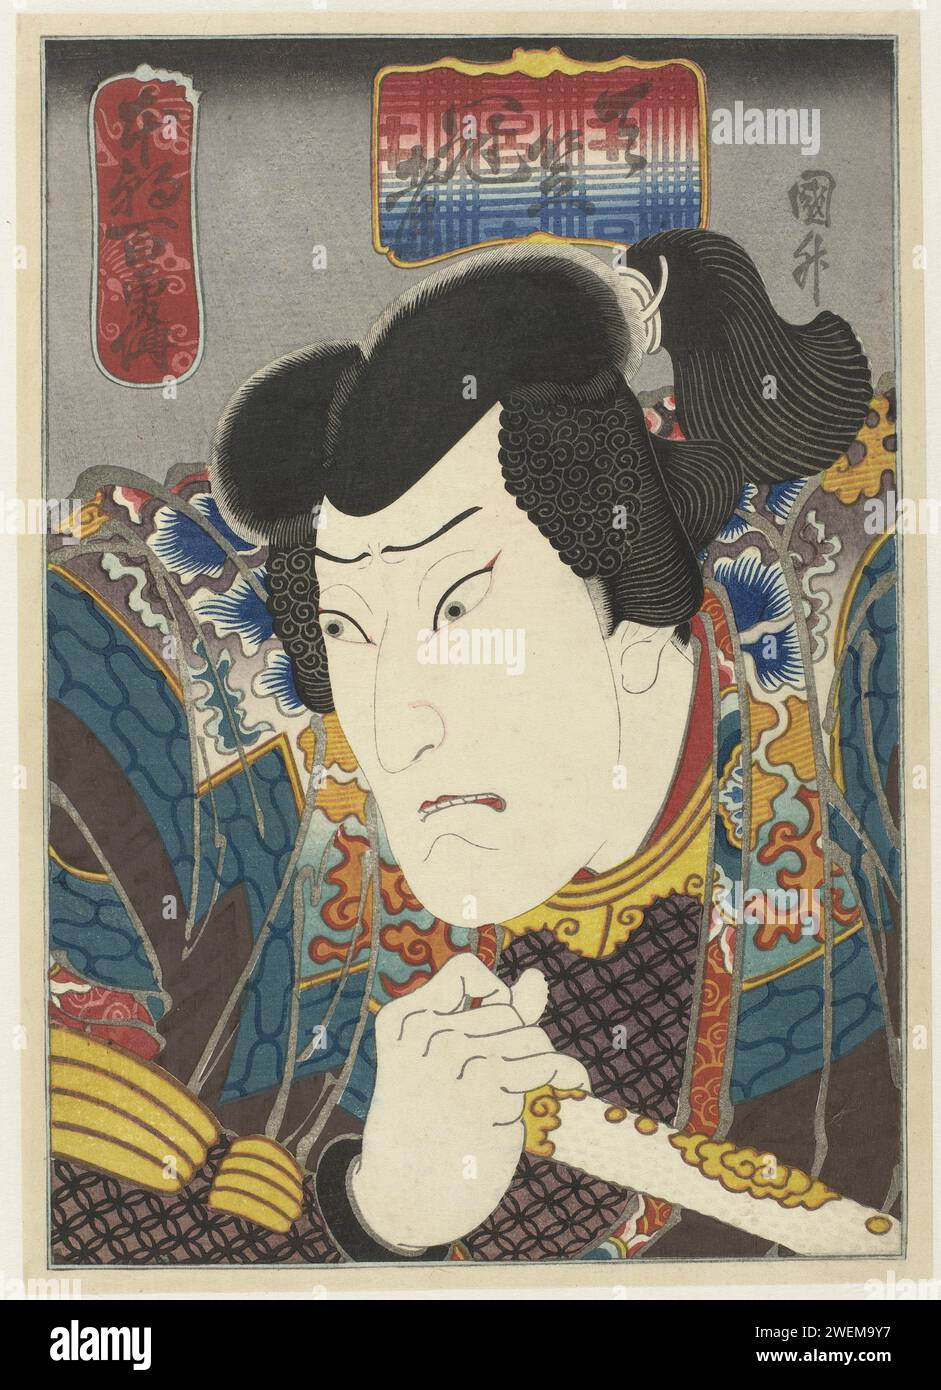 ÔKawa Hashizô I Als Tenjiku Kanja, 1848 print Play player ôkawa Hashizô I as Tenjiku Kanja (Tokubei), in the piece 'Sangoku ichi tsui no kuromono', performed in the Kado Theater in the eighth month of 1848.  paper color woodcut portrait of actor, actress. adult man Stock Photo